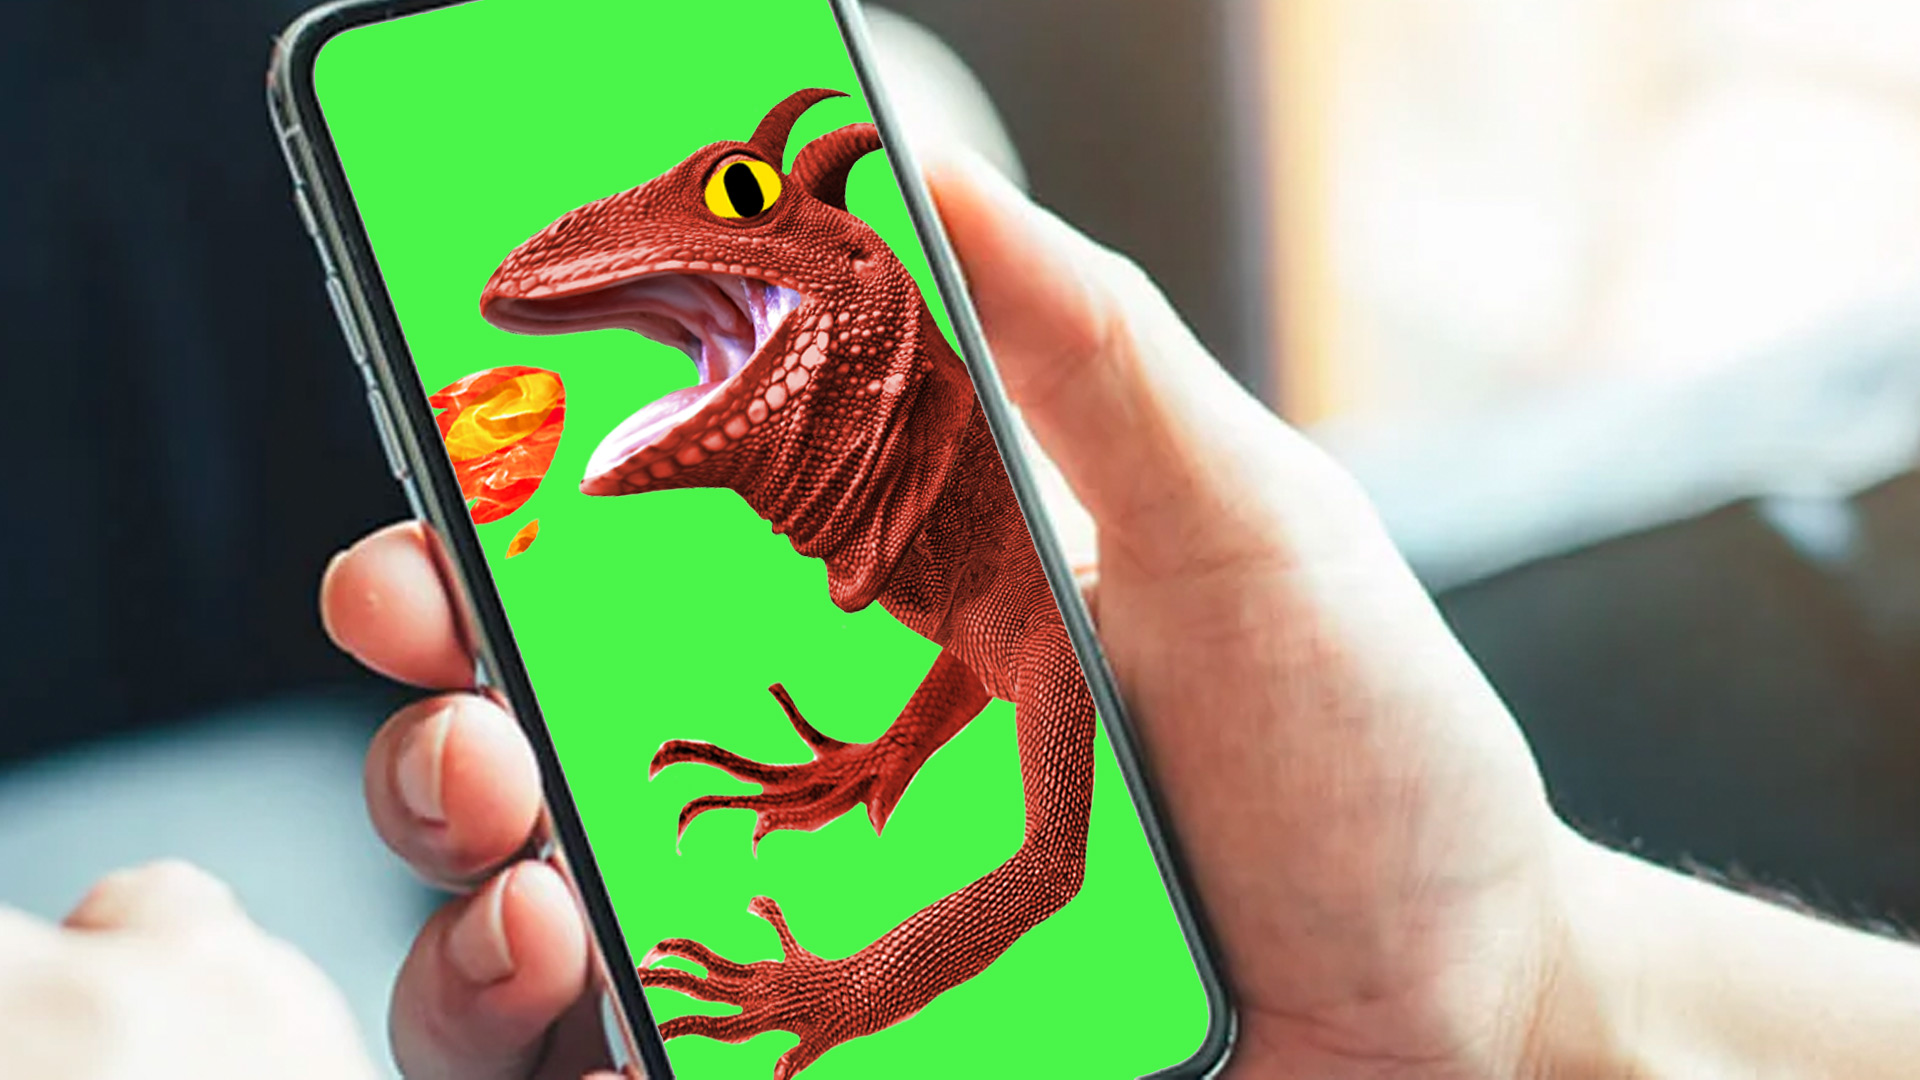 A dragon wallpaper on smartphone